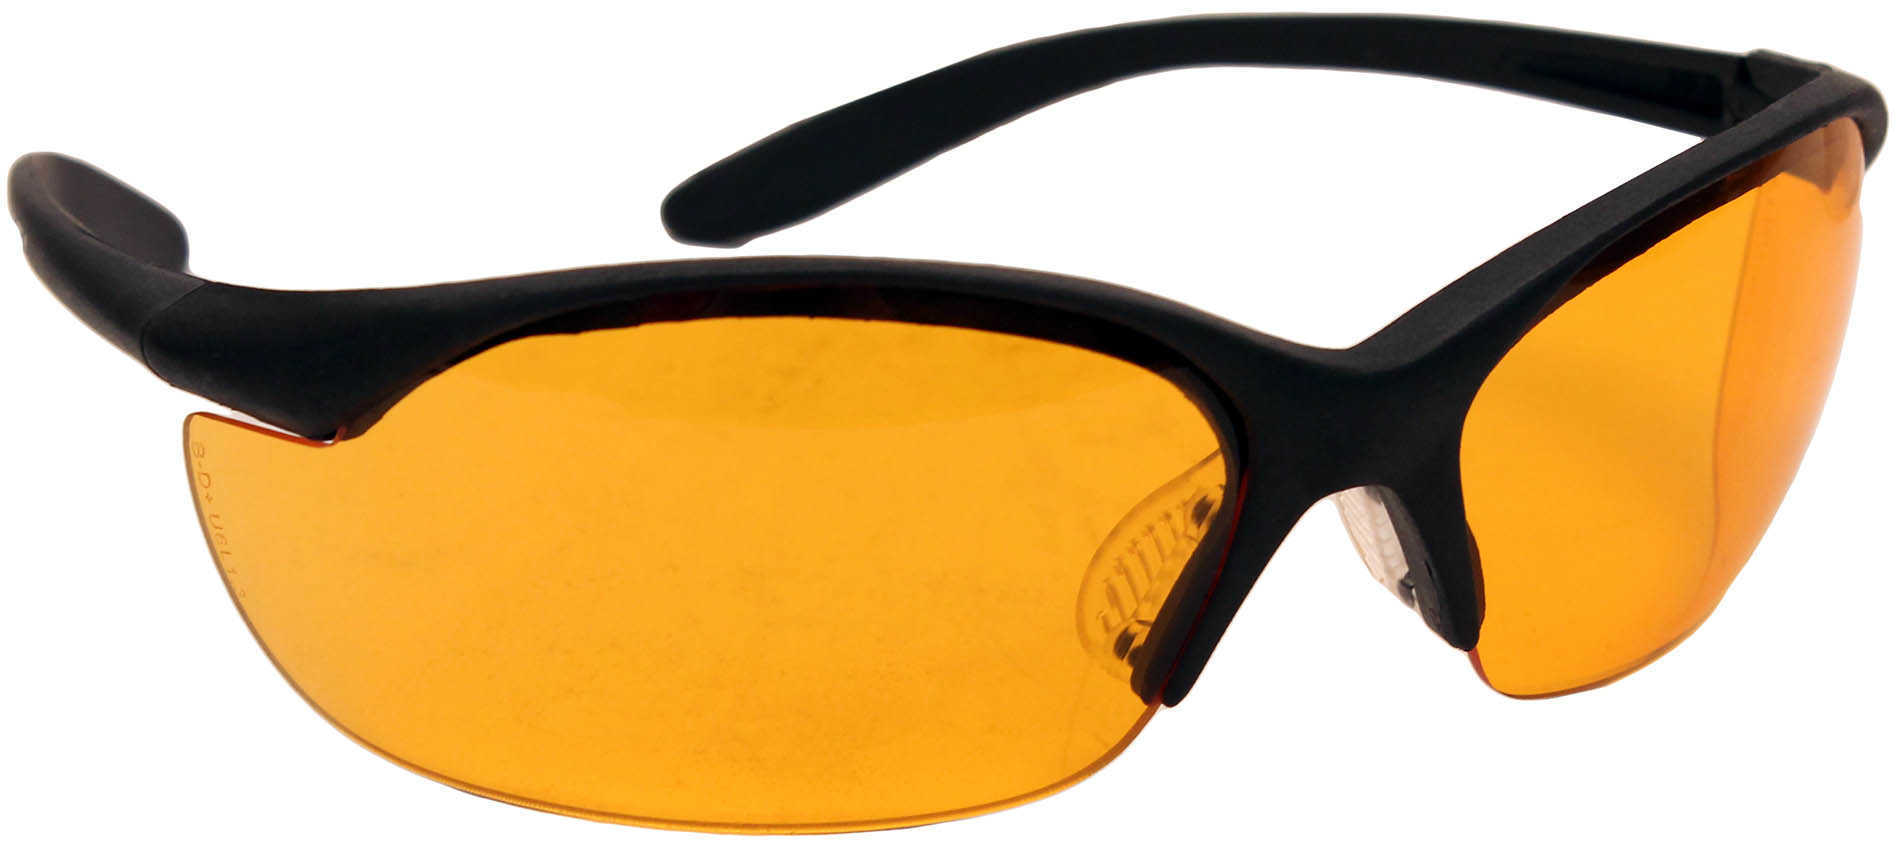 Howard Leight Industries Vapor II Eyewear Black Frame - Orange Lens Anti-Fog Coating Wrap-Around Design Comfort